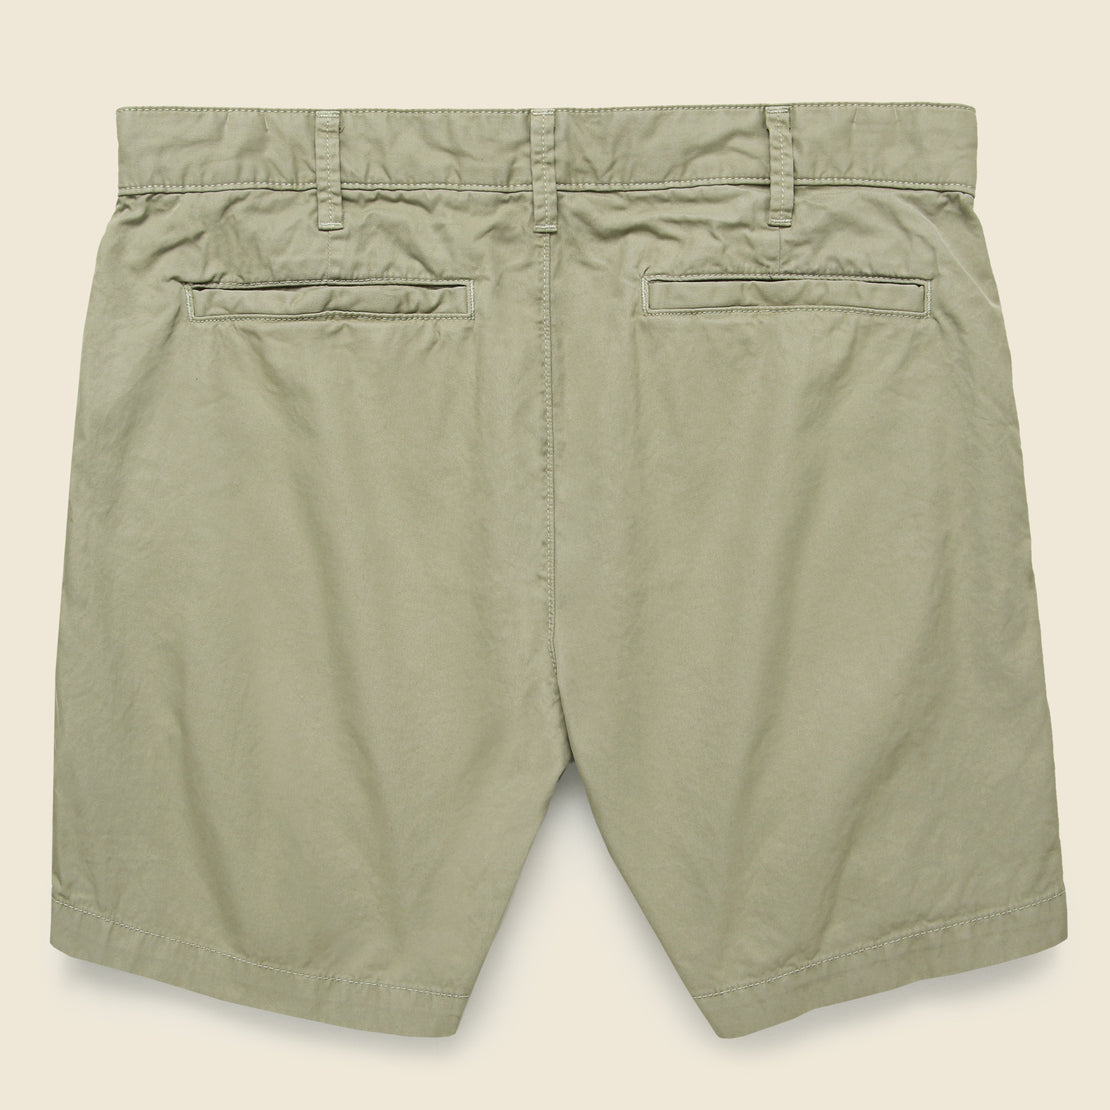 6-inch Twill Bermuda Short - Khaki - Save Khaki - STAG Provisions - Shorts - Solid